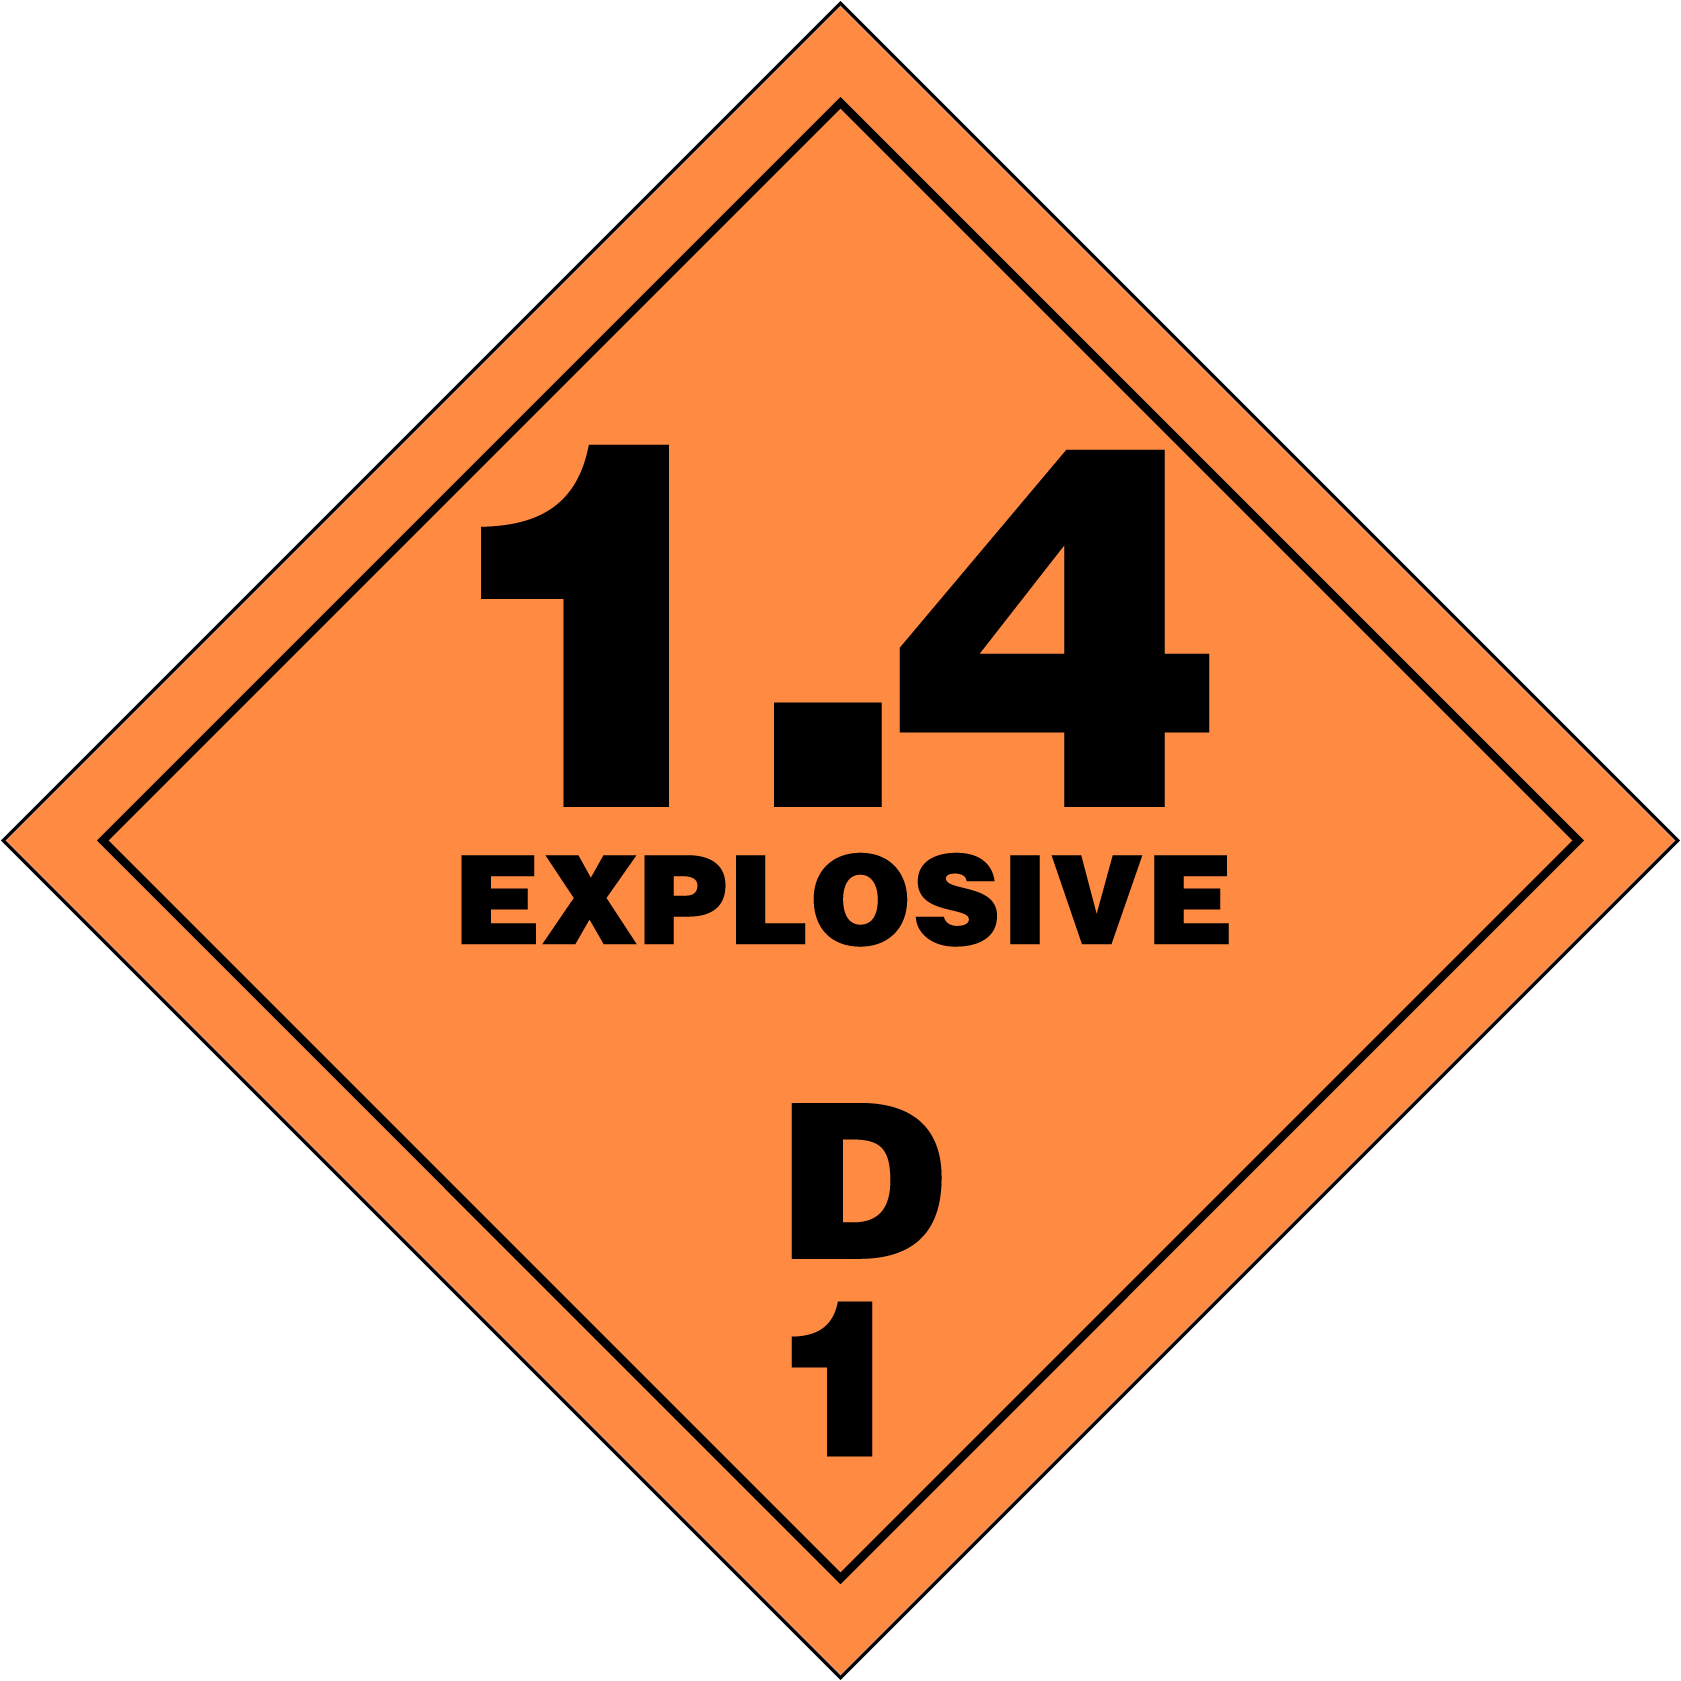 Explosives (1.4D)